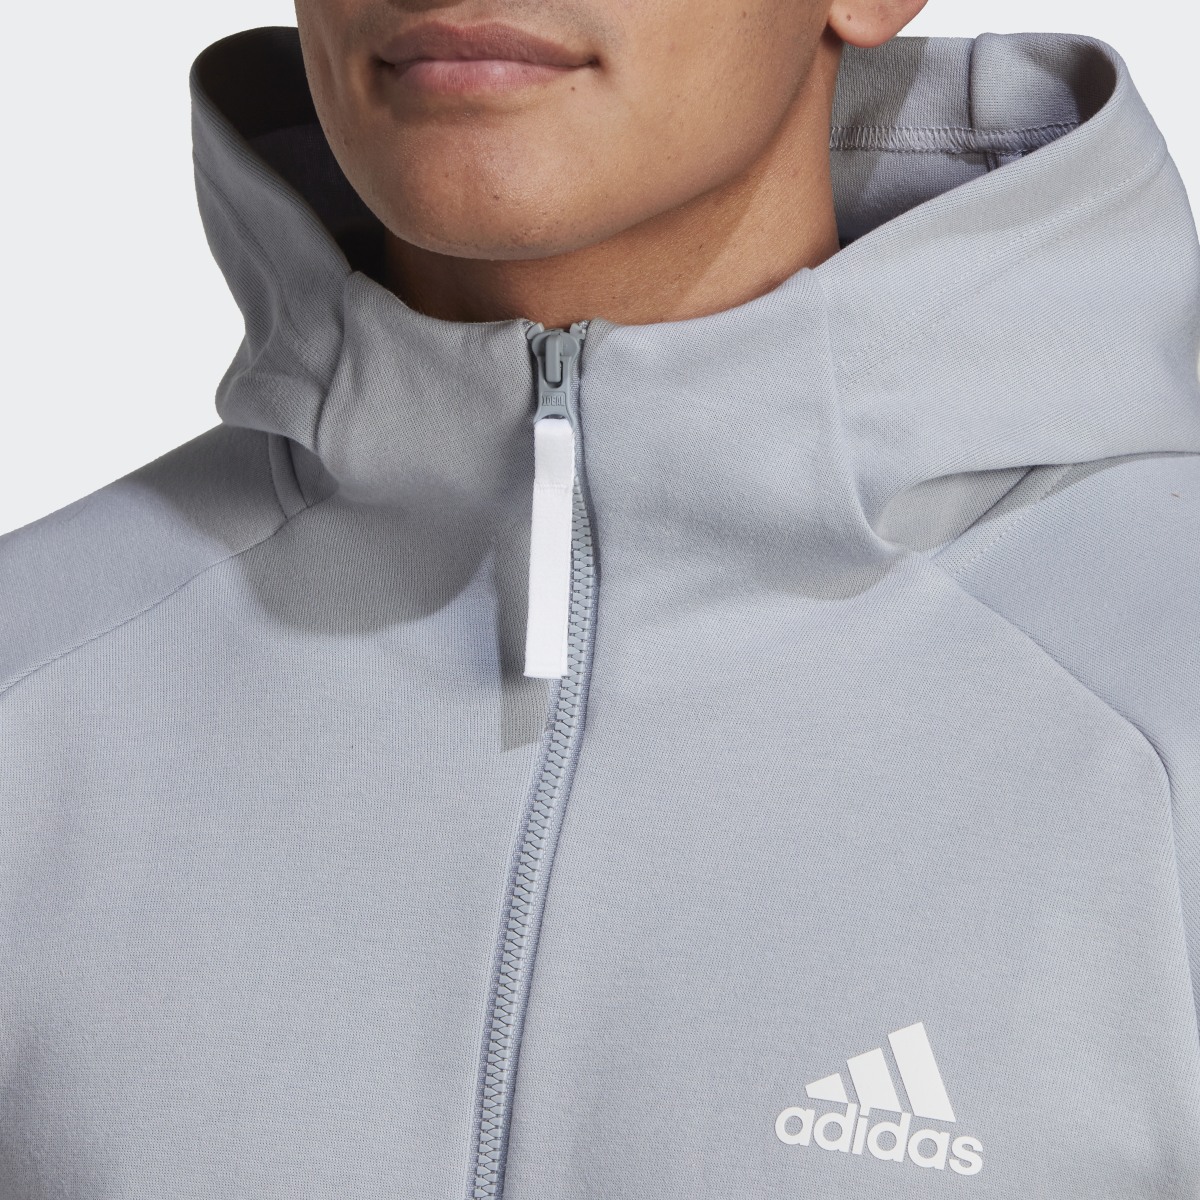 Adidas Designed for Gameday Full-Zip Jacket. 6